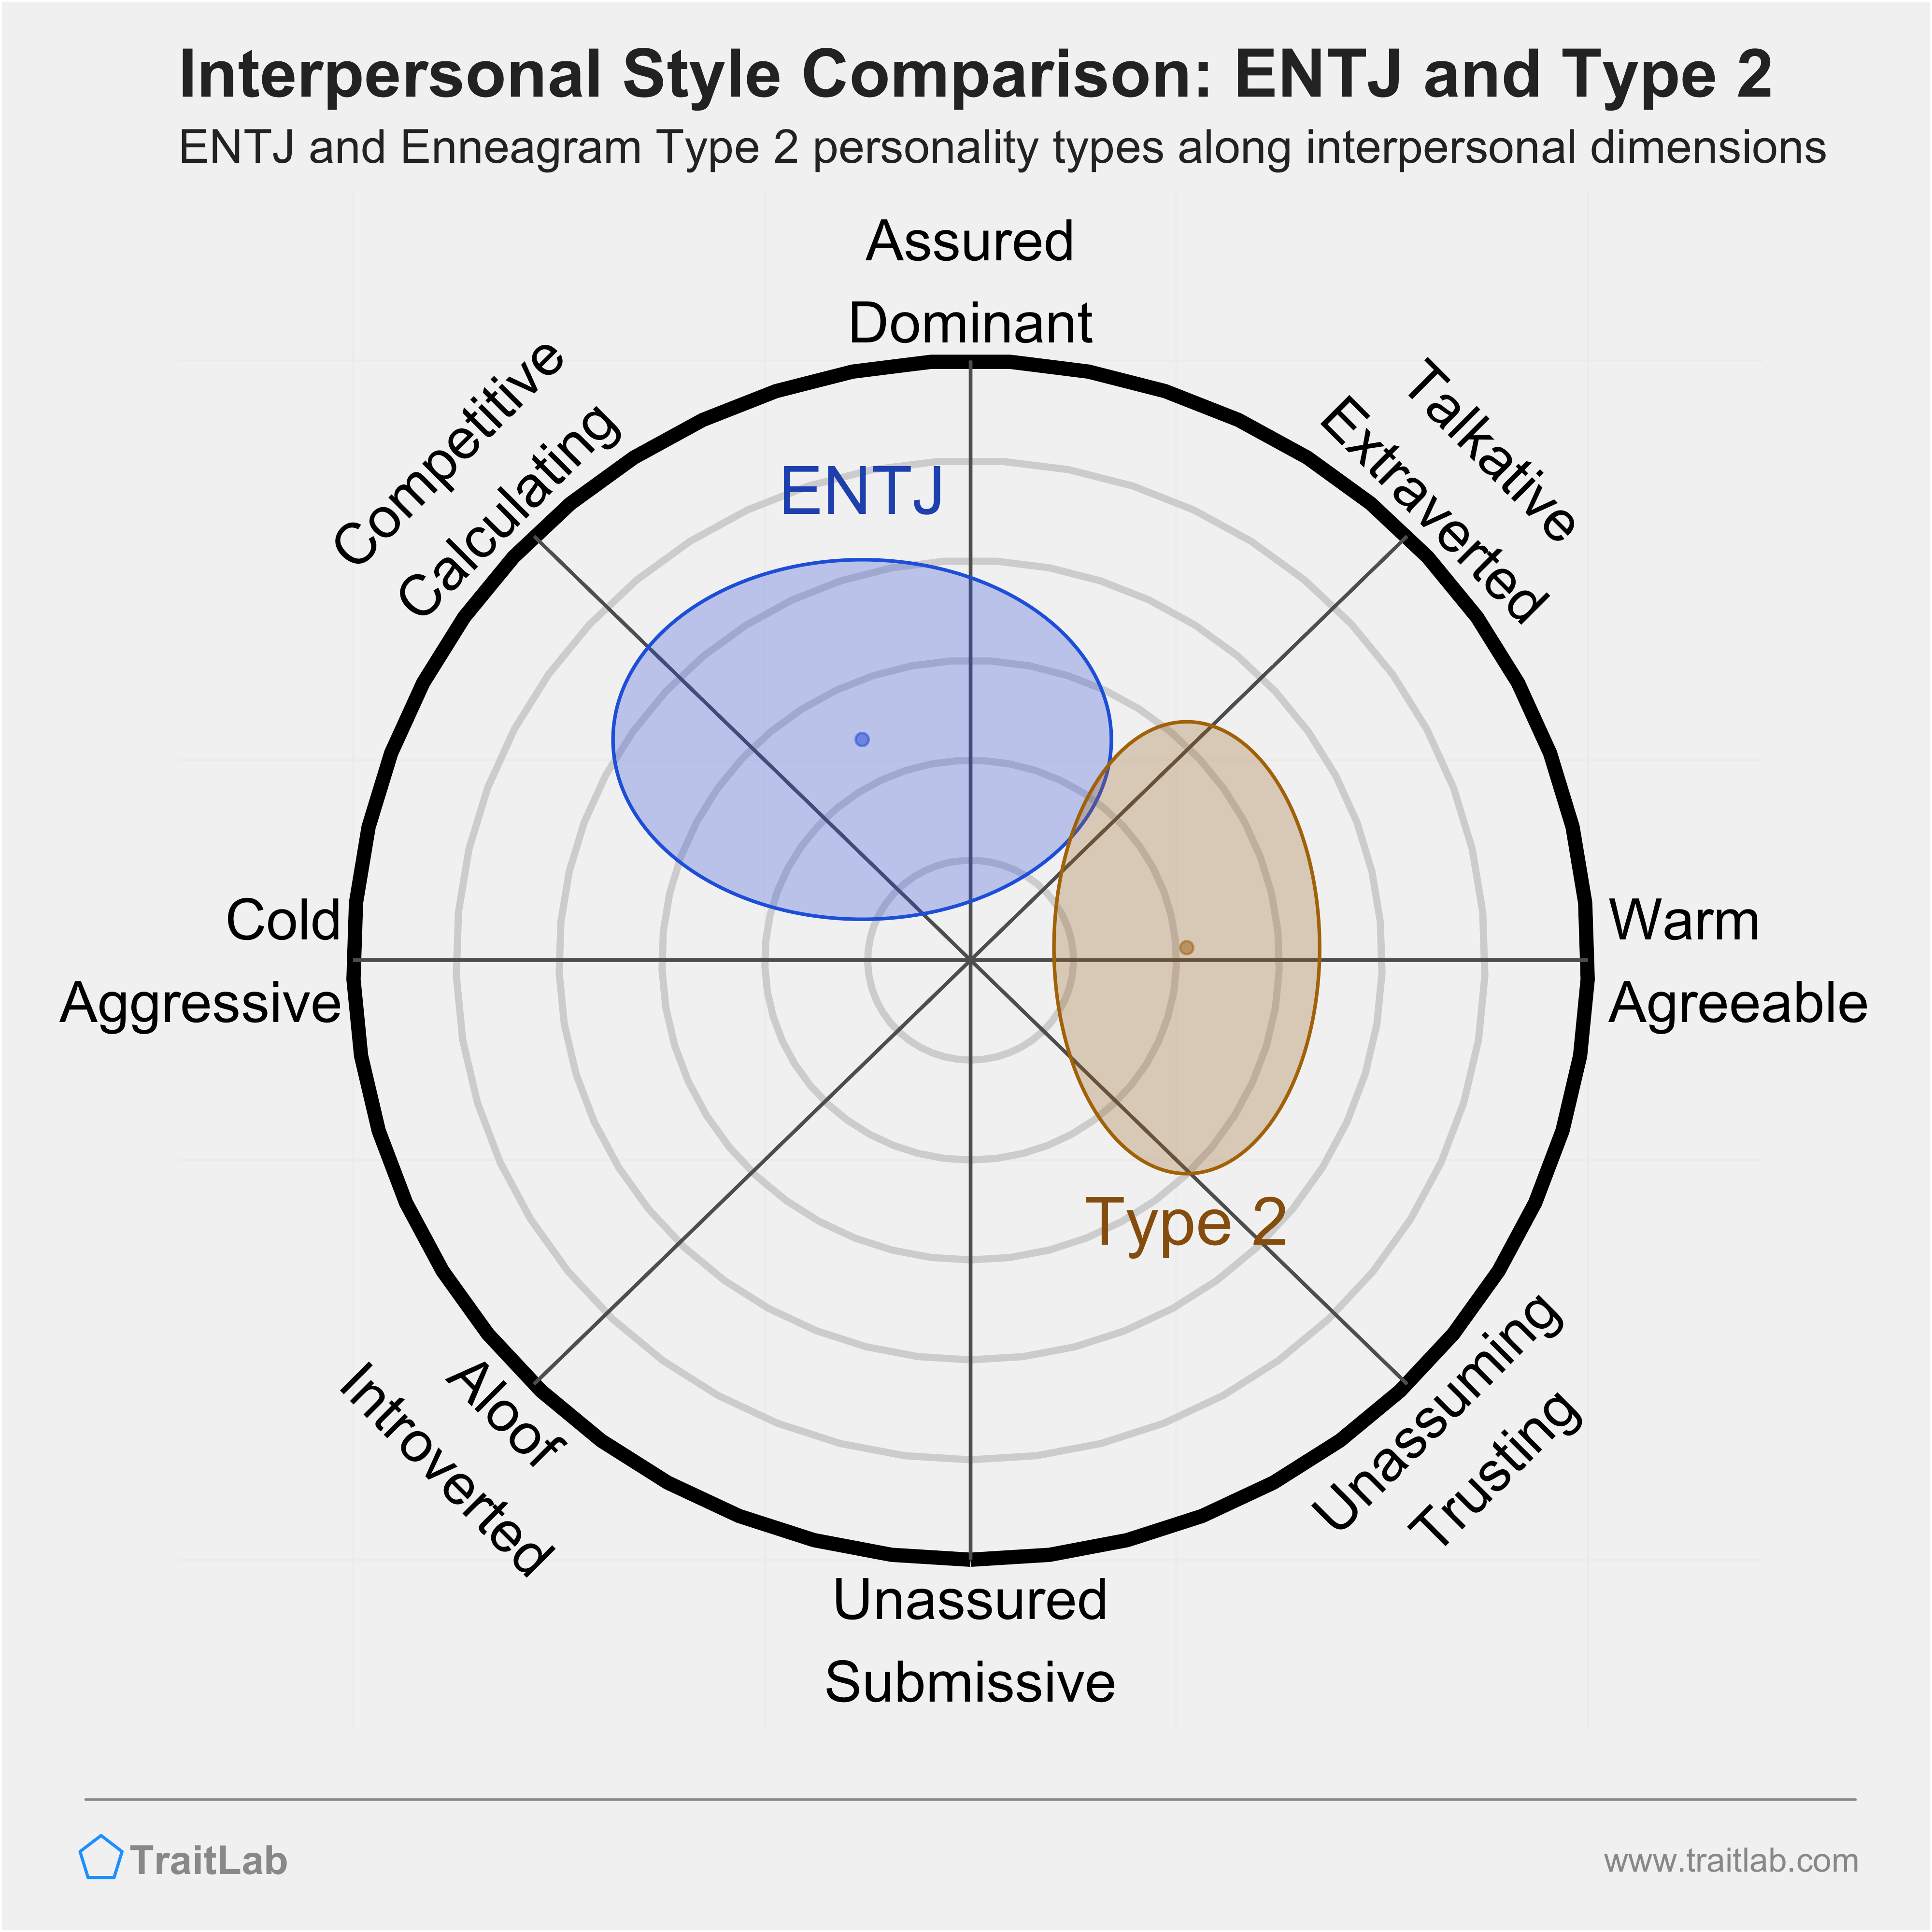 Enneagram ENTJ and Type 2 comparison across interpersonal dimensions